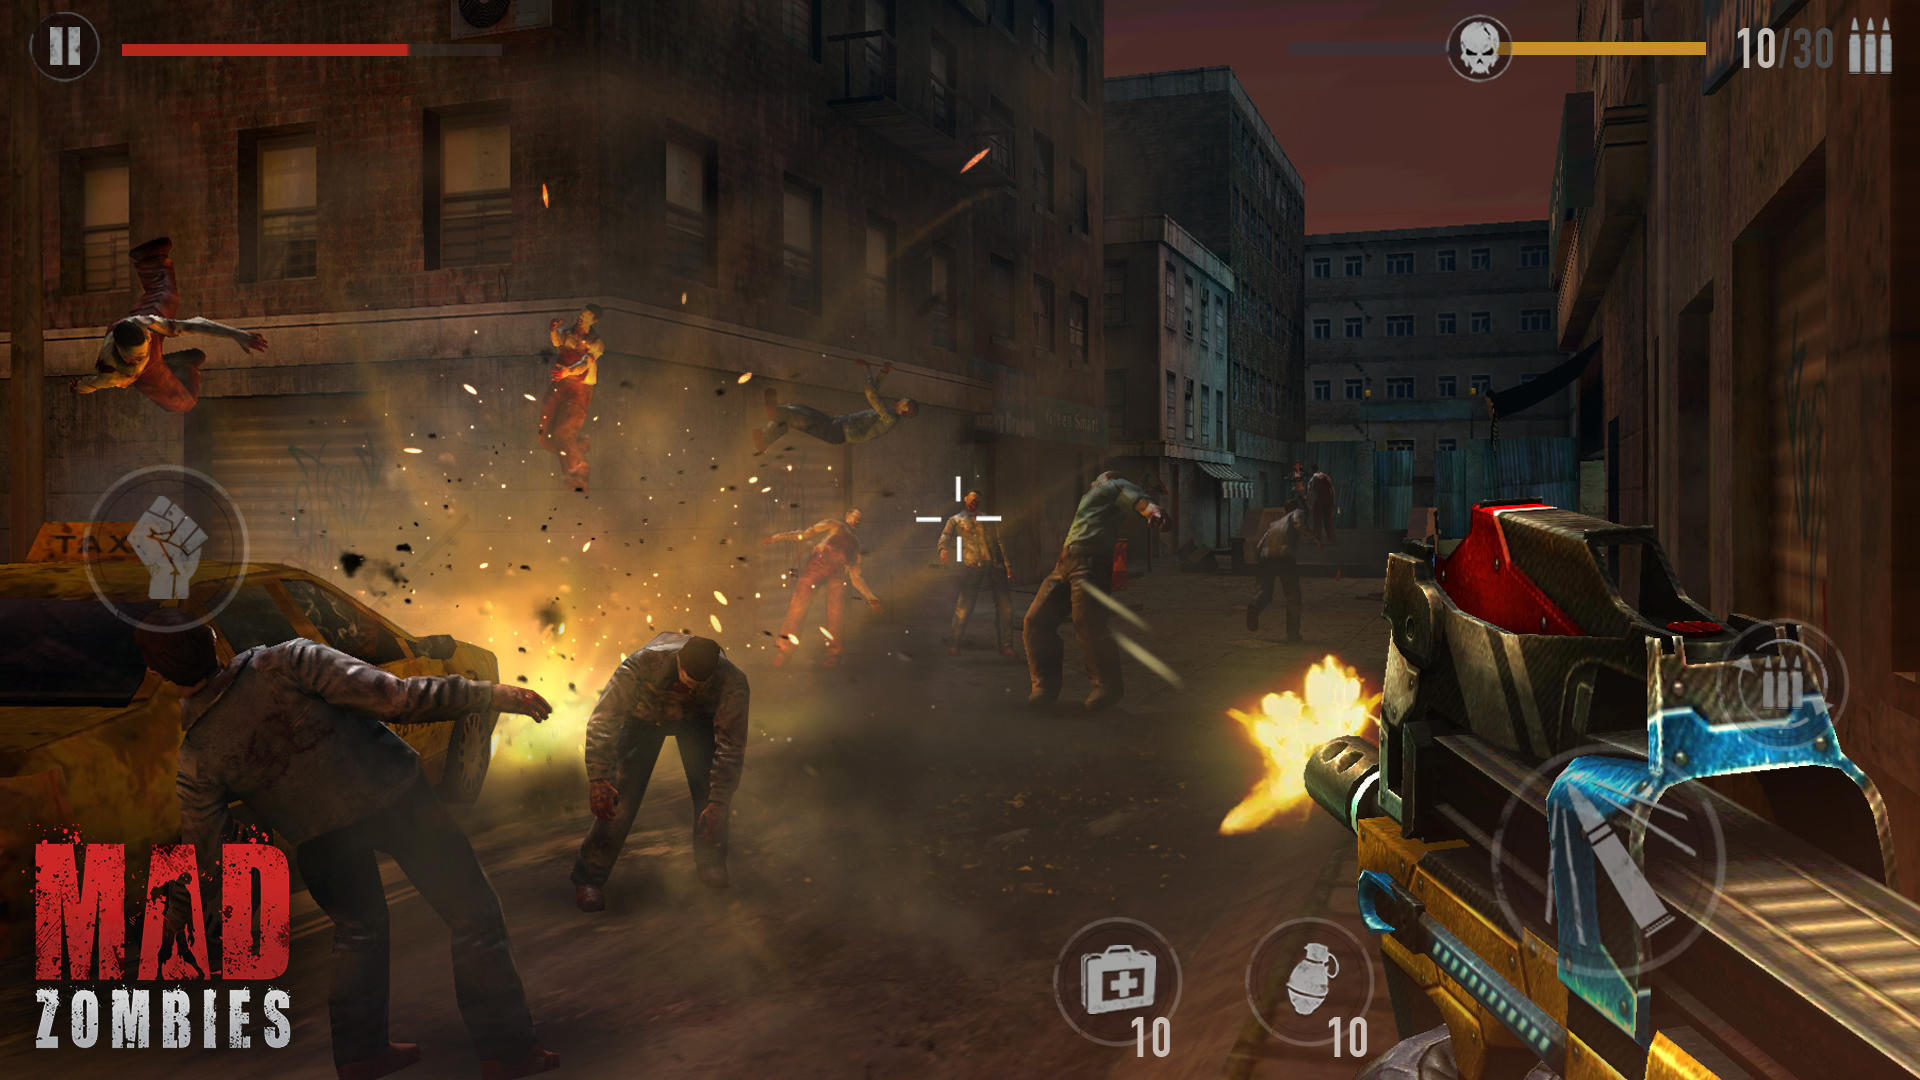 Screenshot 1 of Mad Zombies: Juegos de Zombie 5.35.0